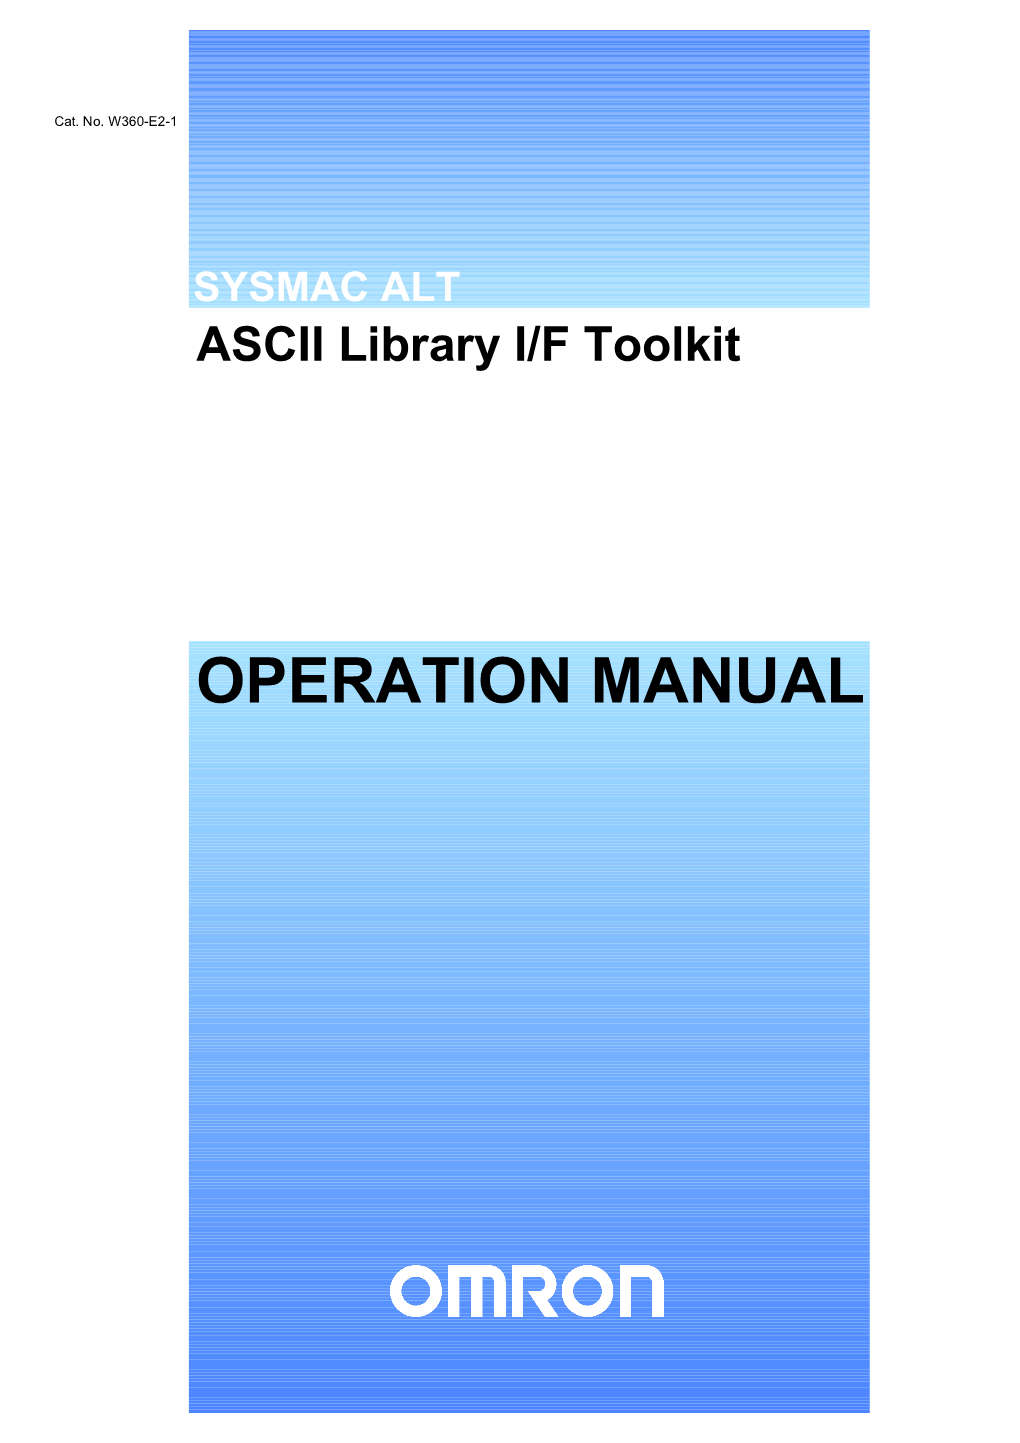 Operation Manual